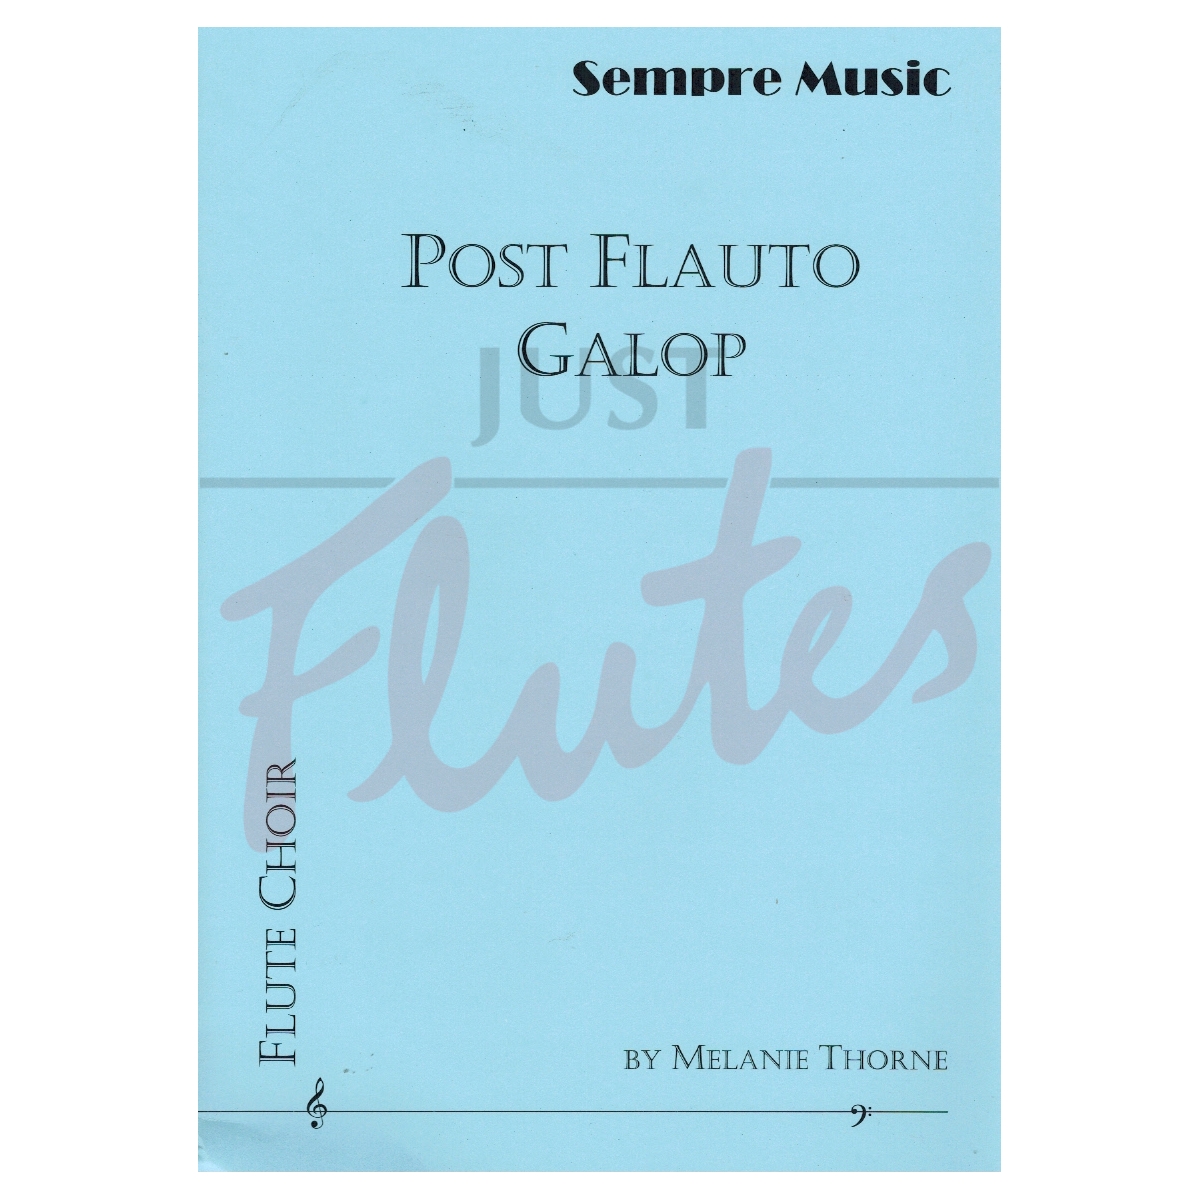 Post Flauto Galop